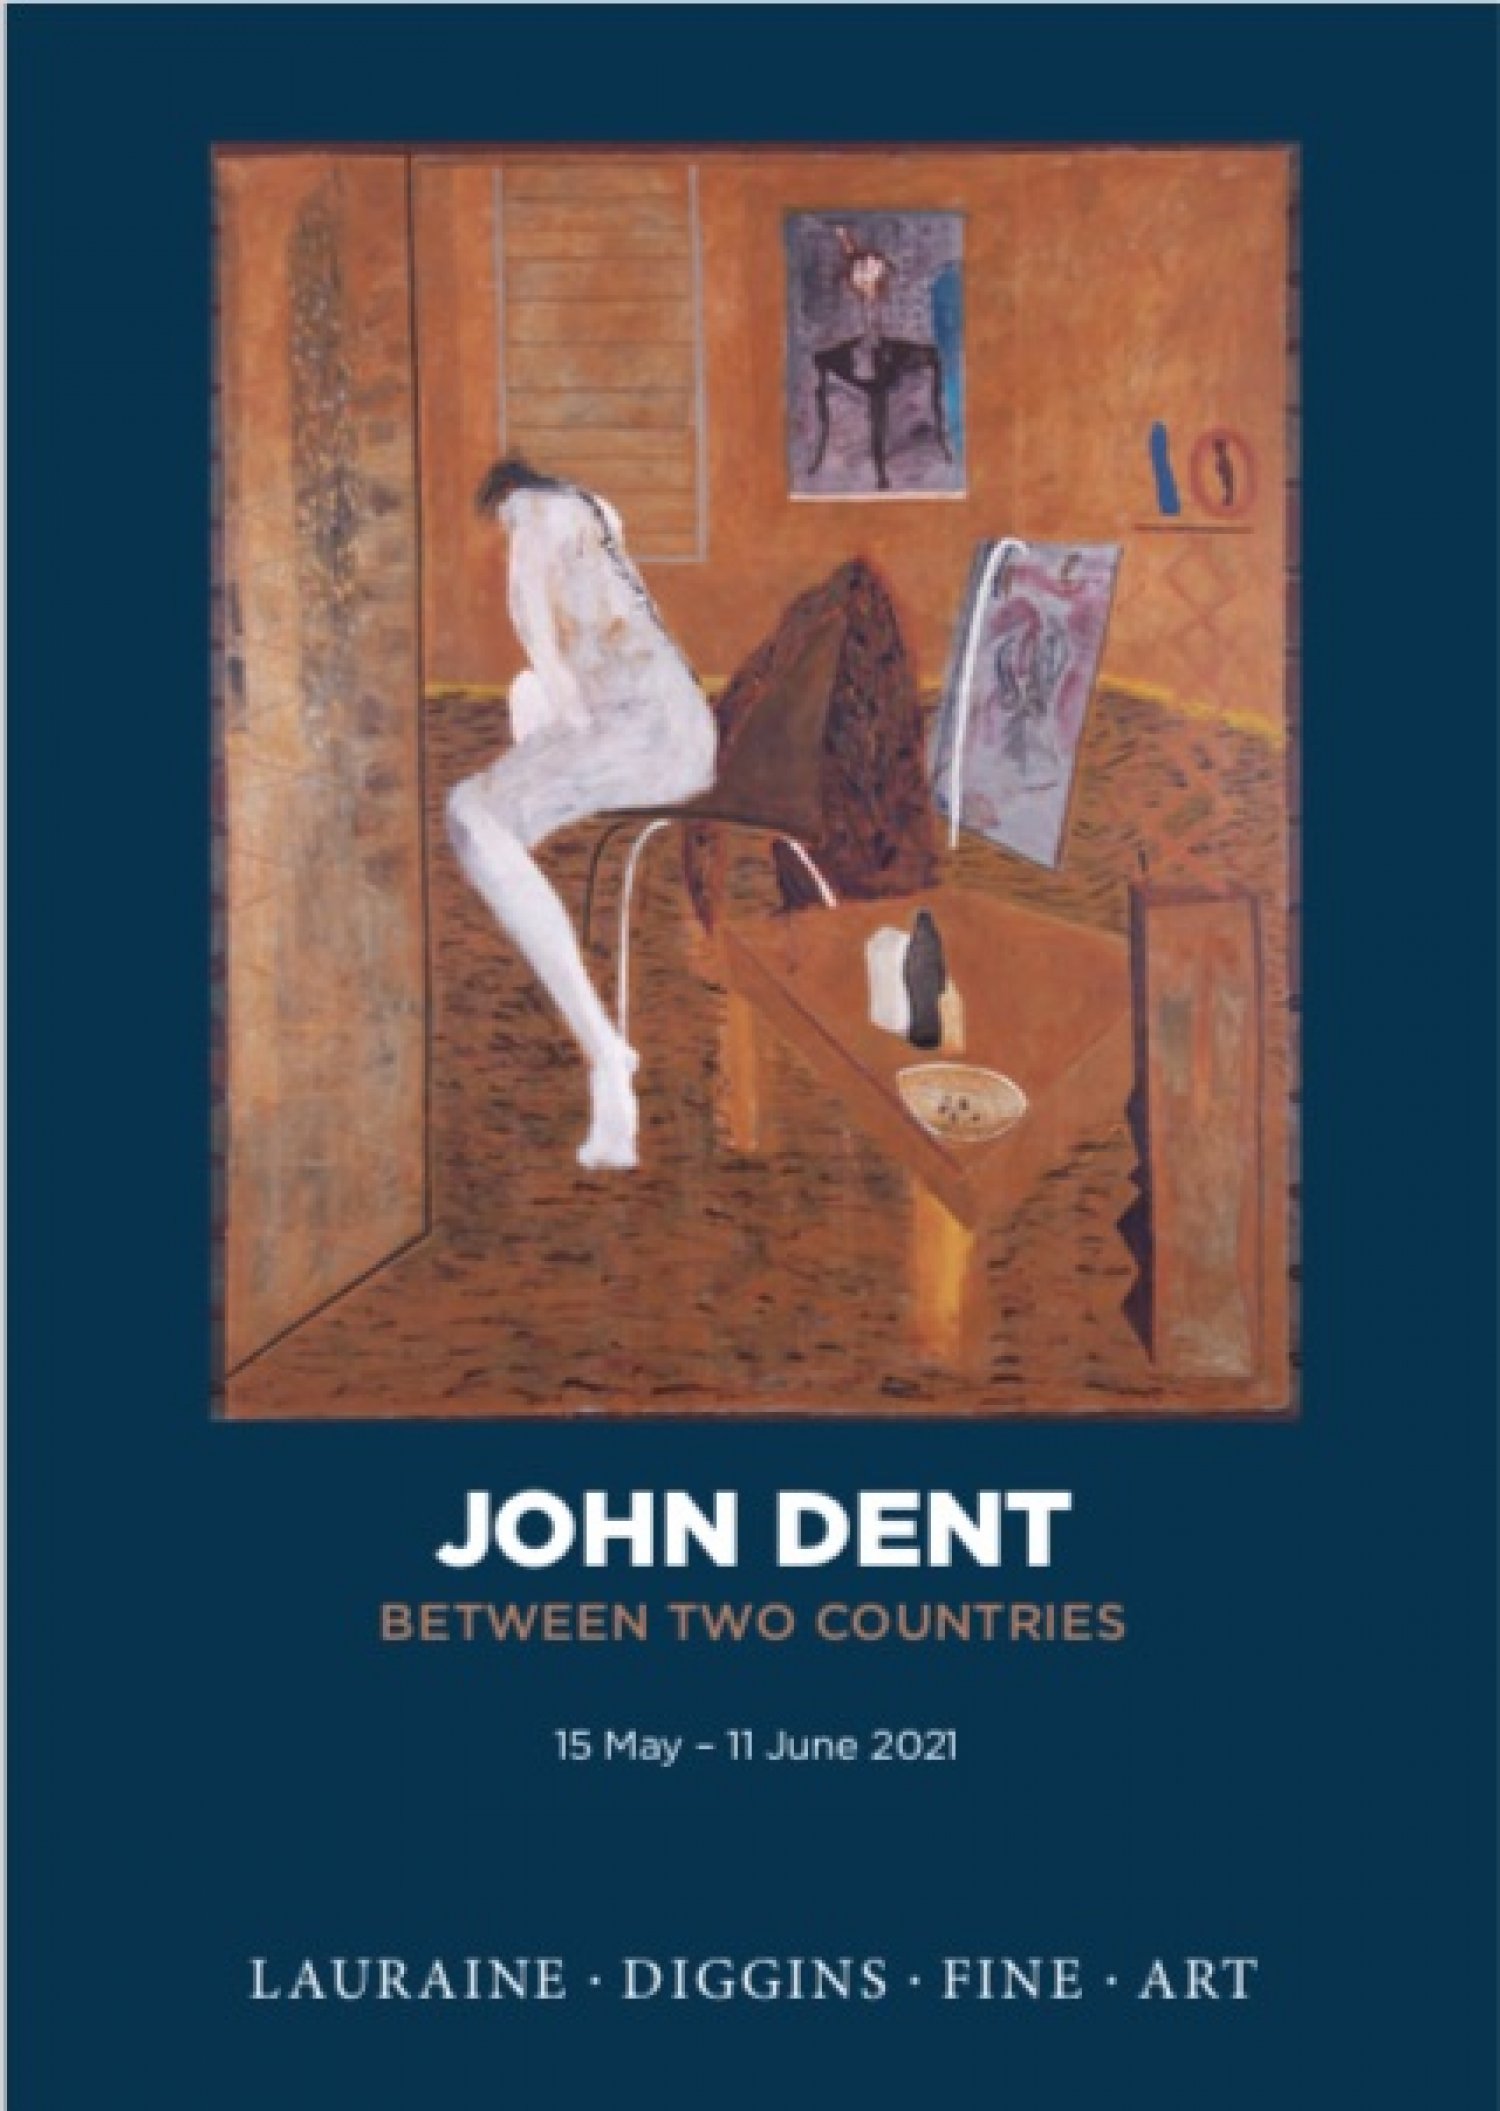 EXHIBITION: John Dent 